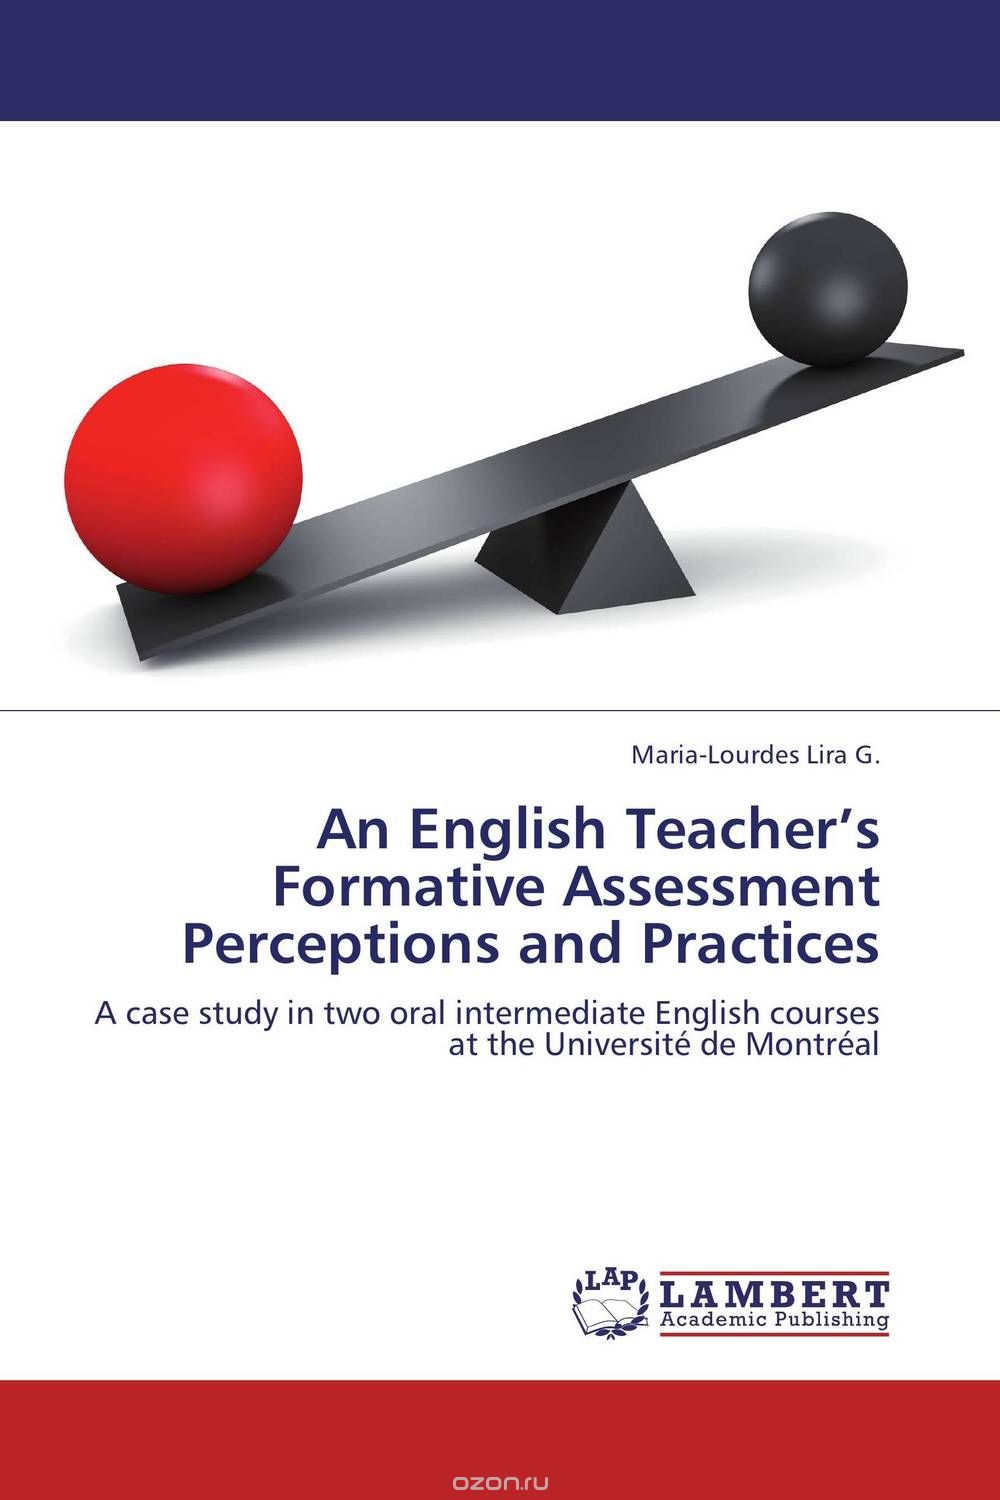 Скачать книгу "An English Teacher’s Formative Assessment Perceptions and Practices"